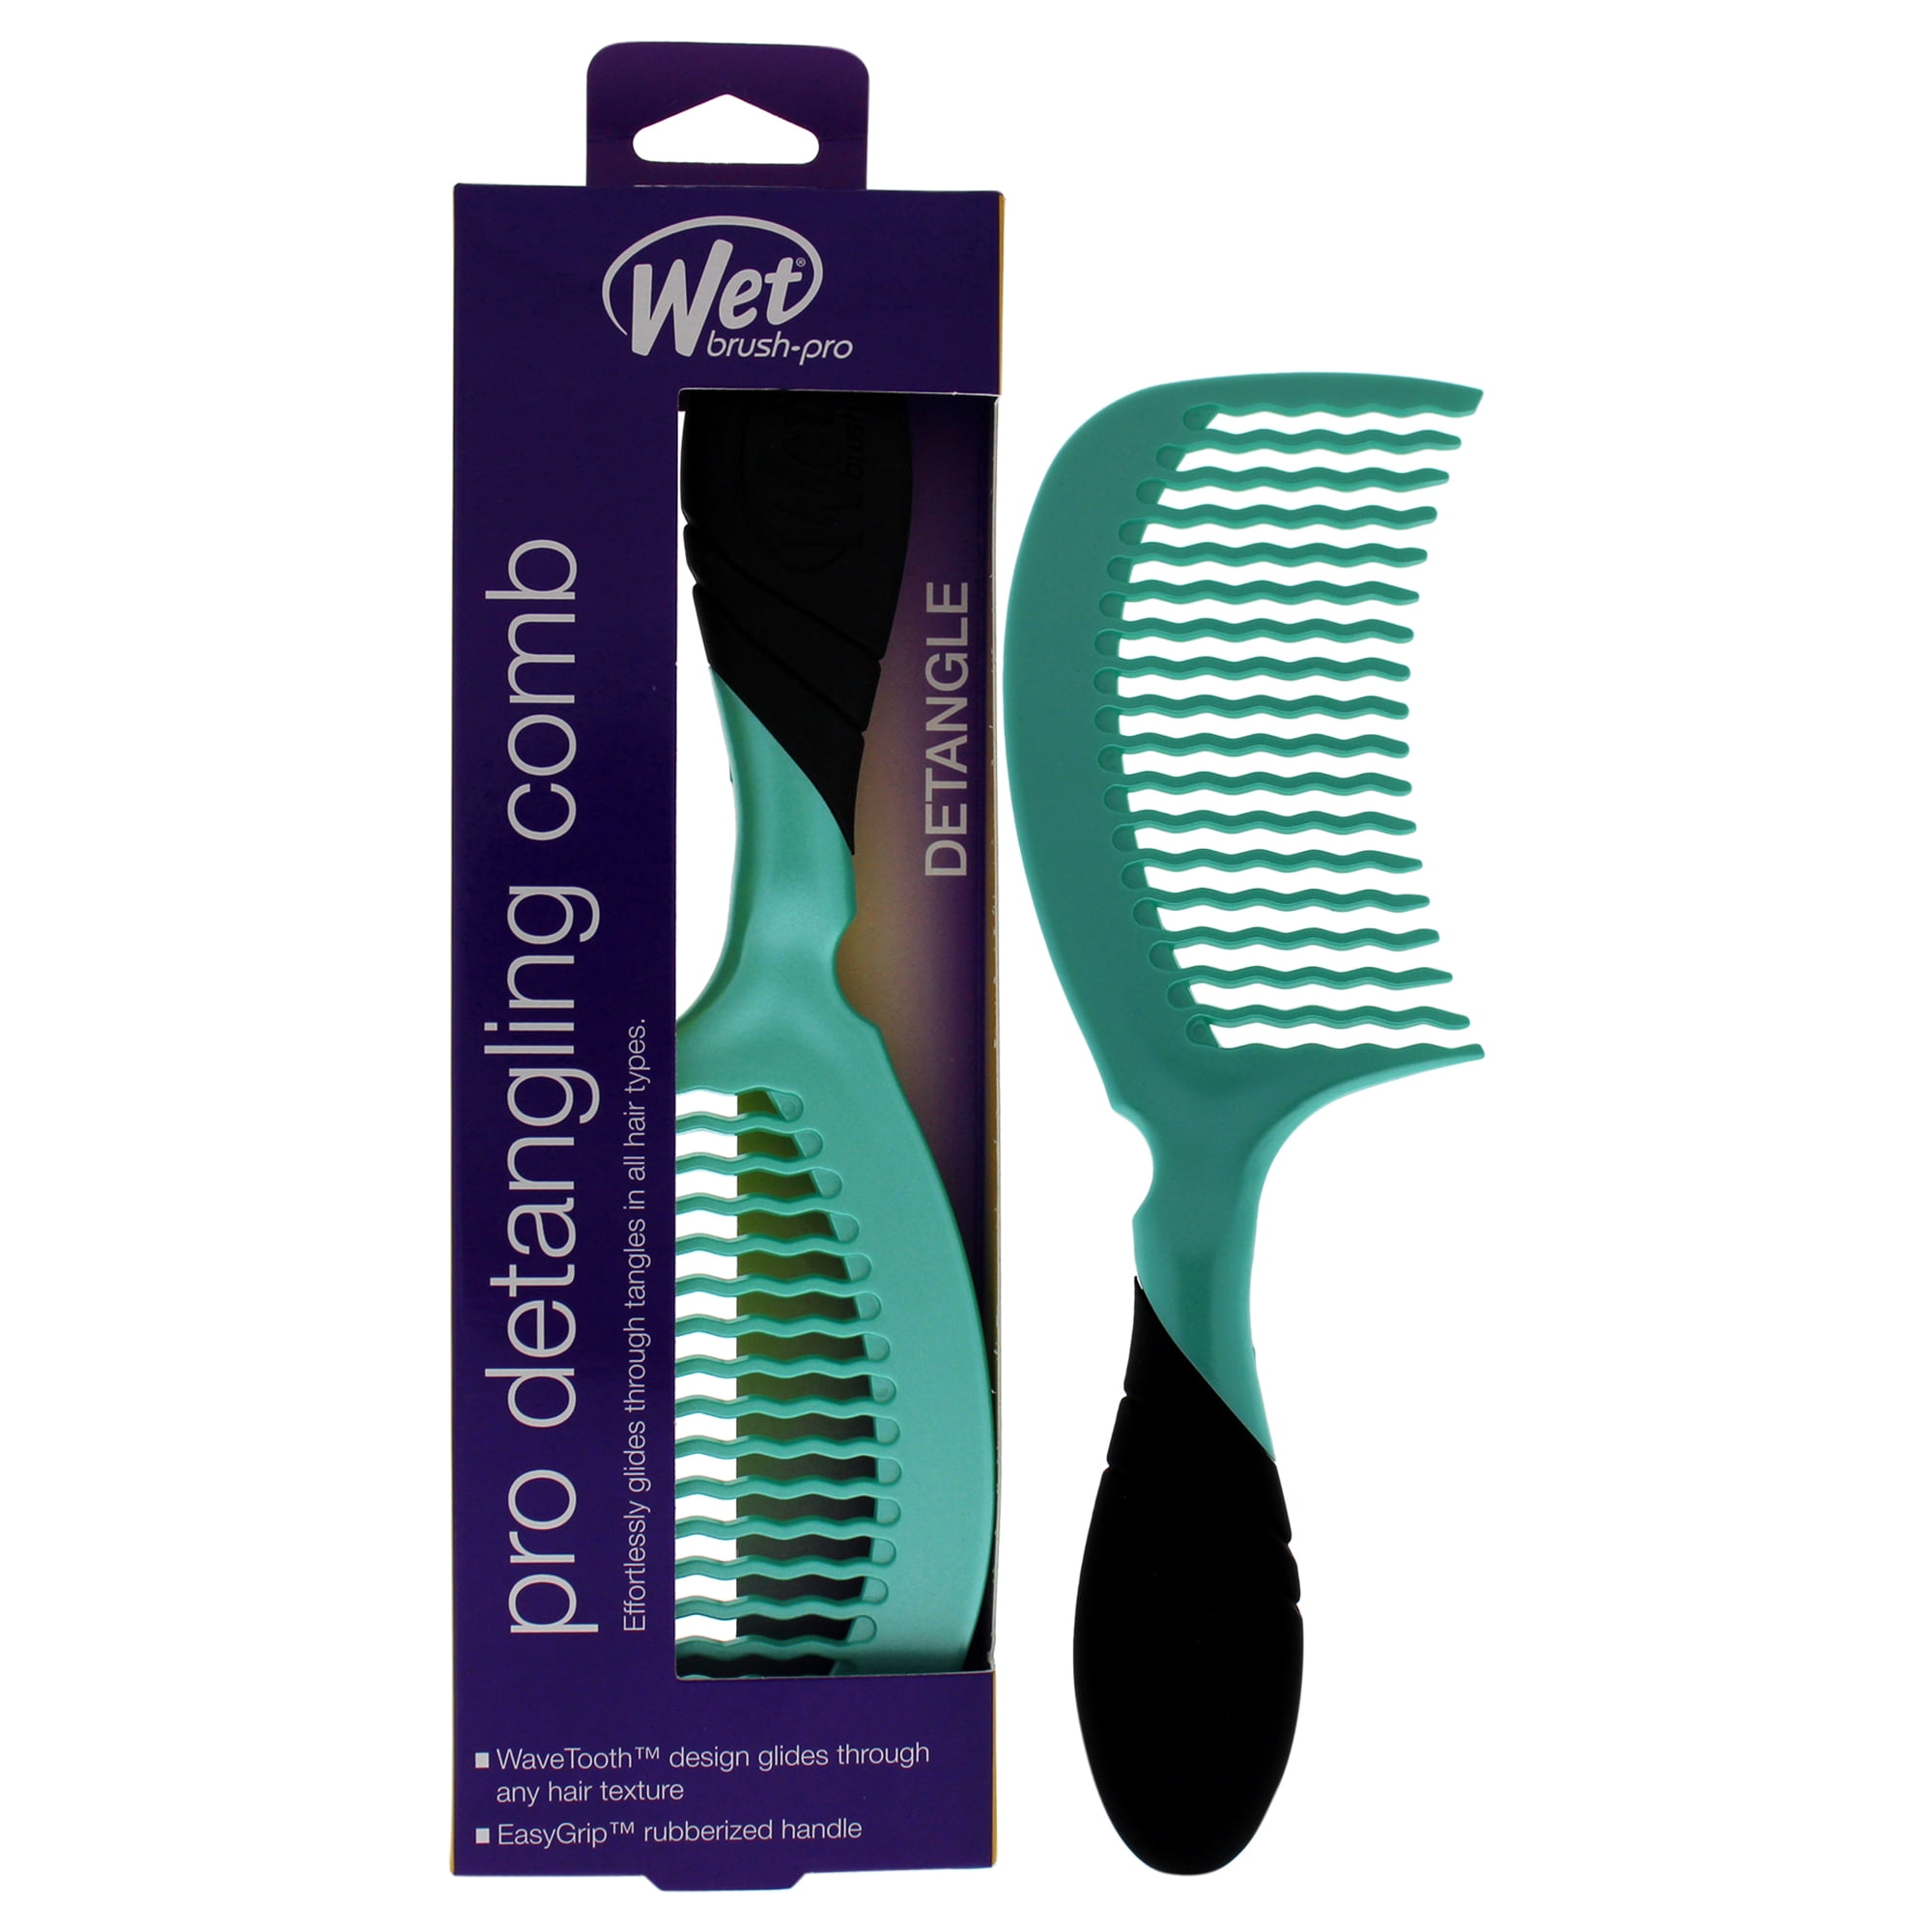 Wet Brush Pro Detangling Comb - Purist Blue, 1 Pc Comb 